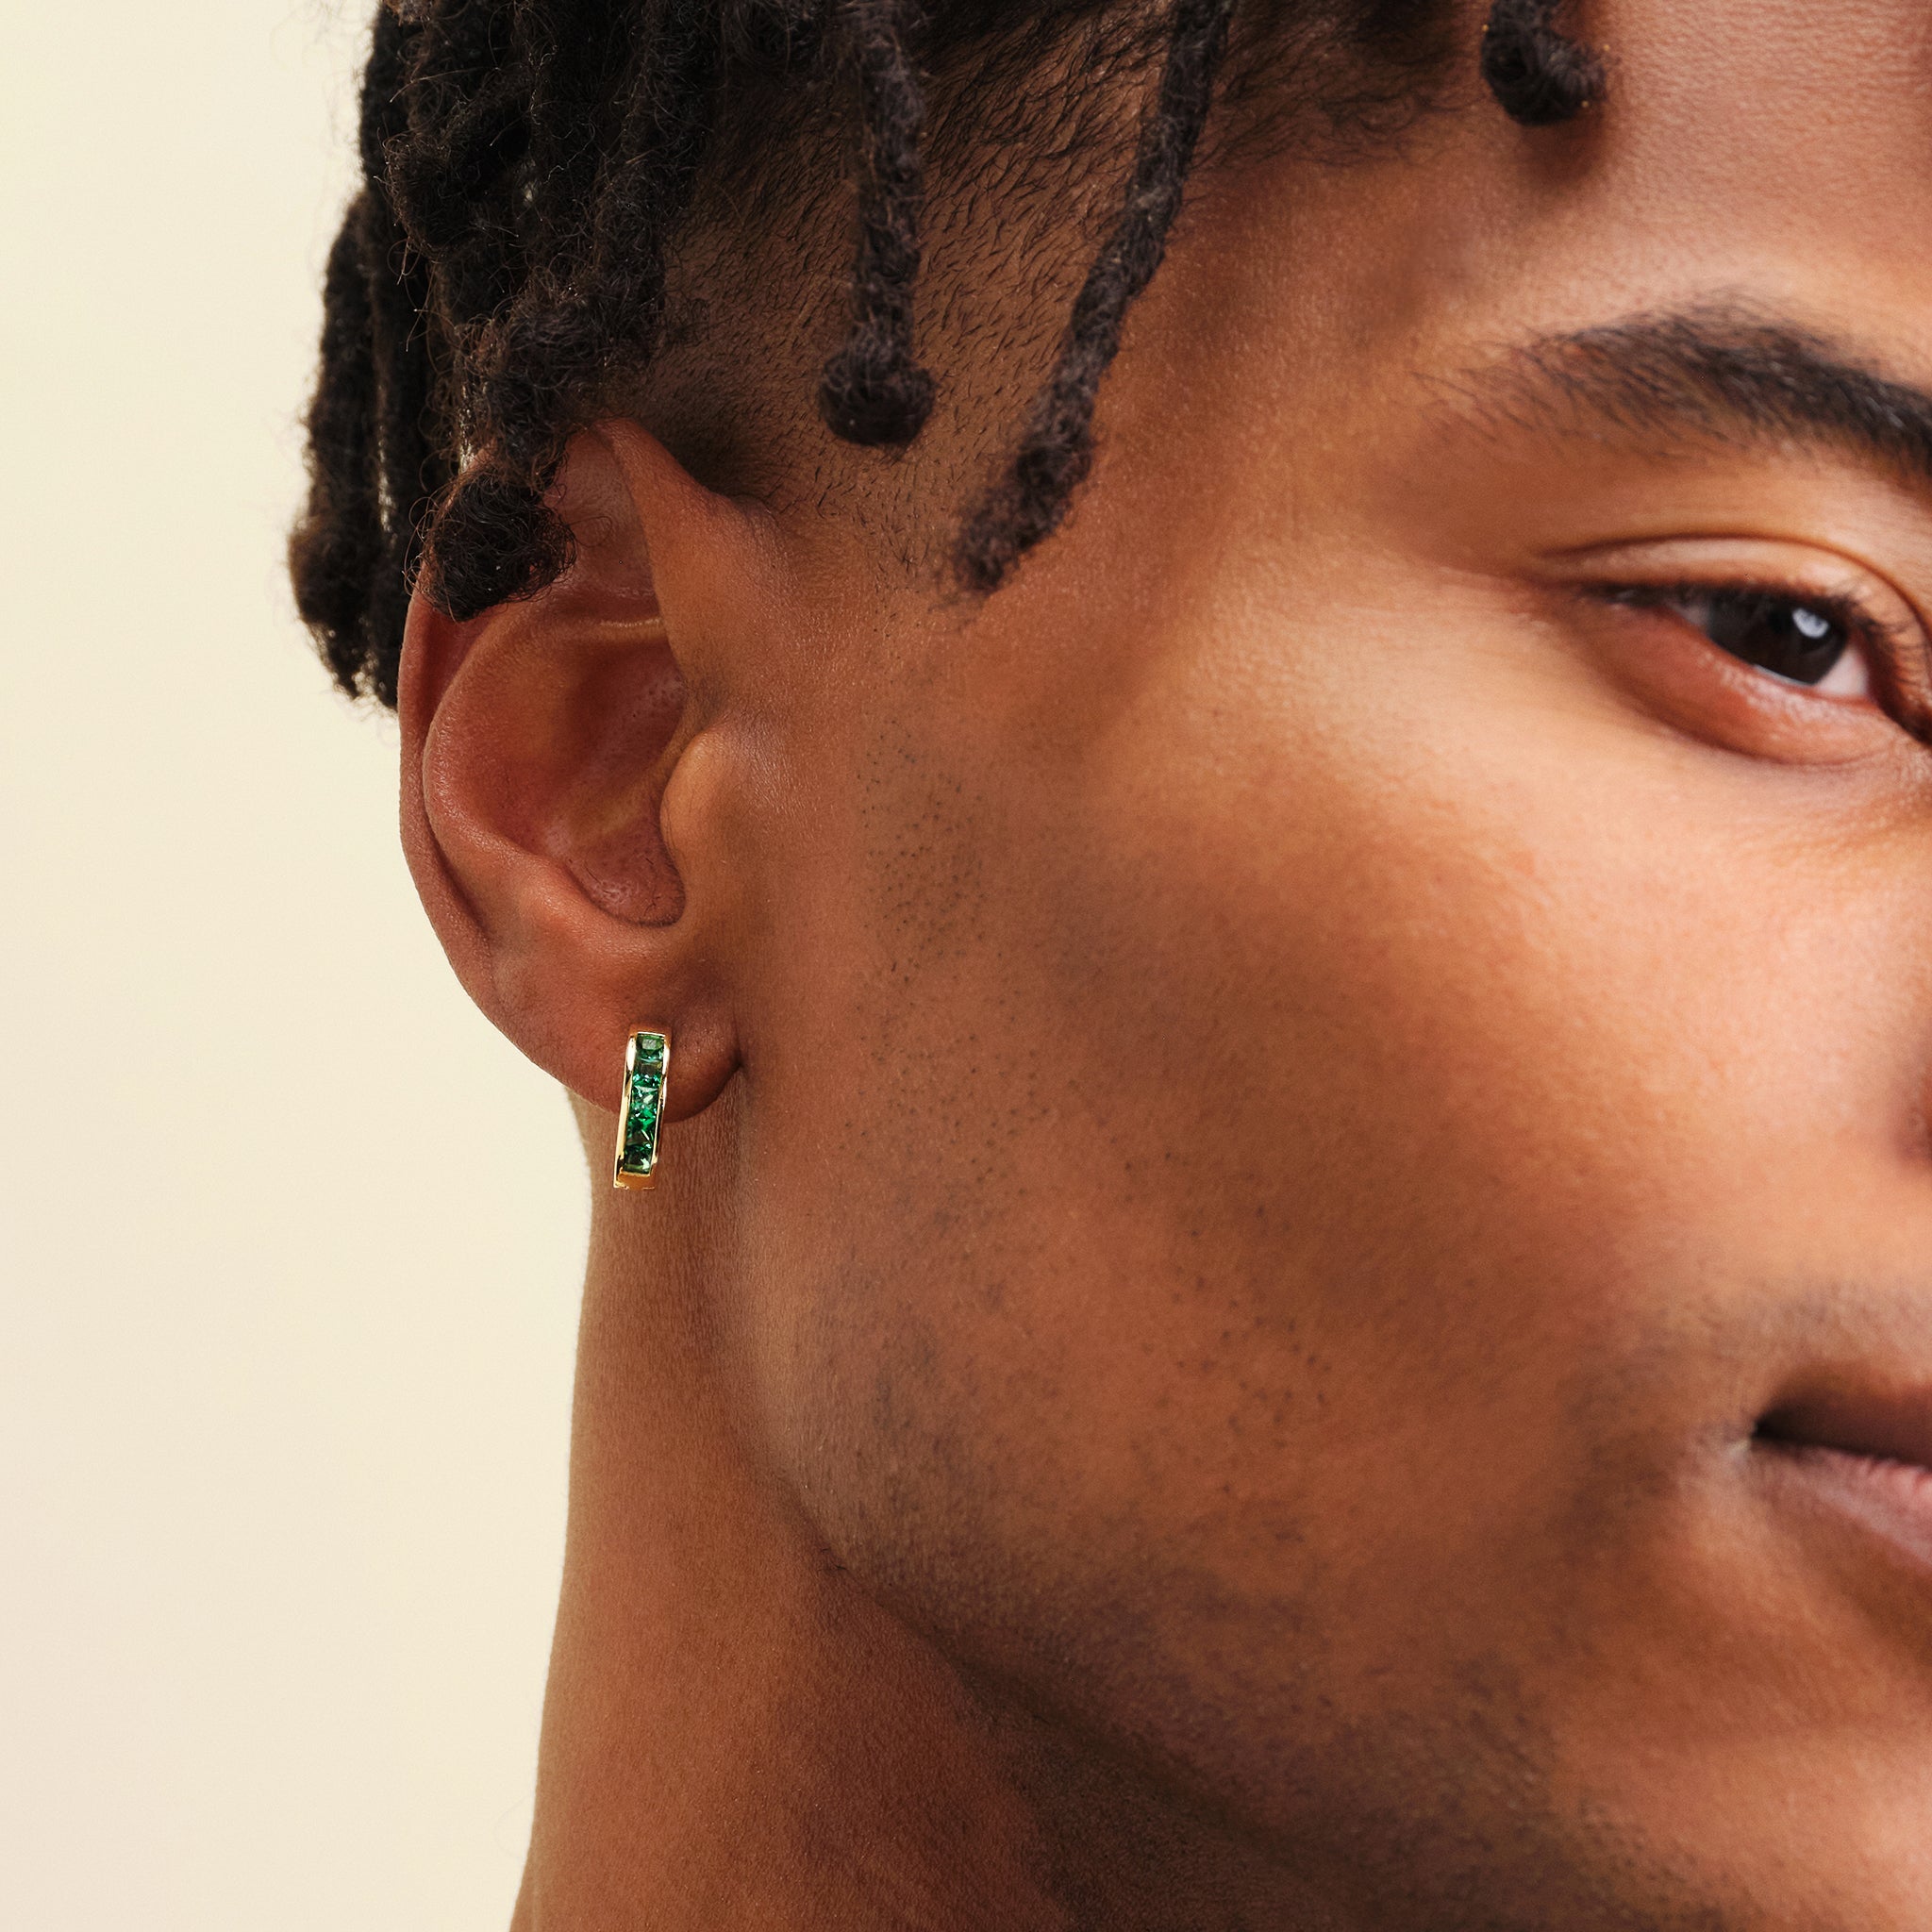 JAXXON Gold Emerald Cut Stud Earrings